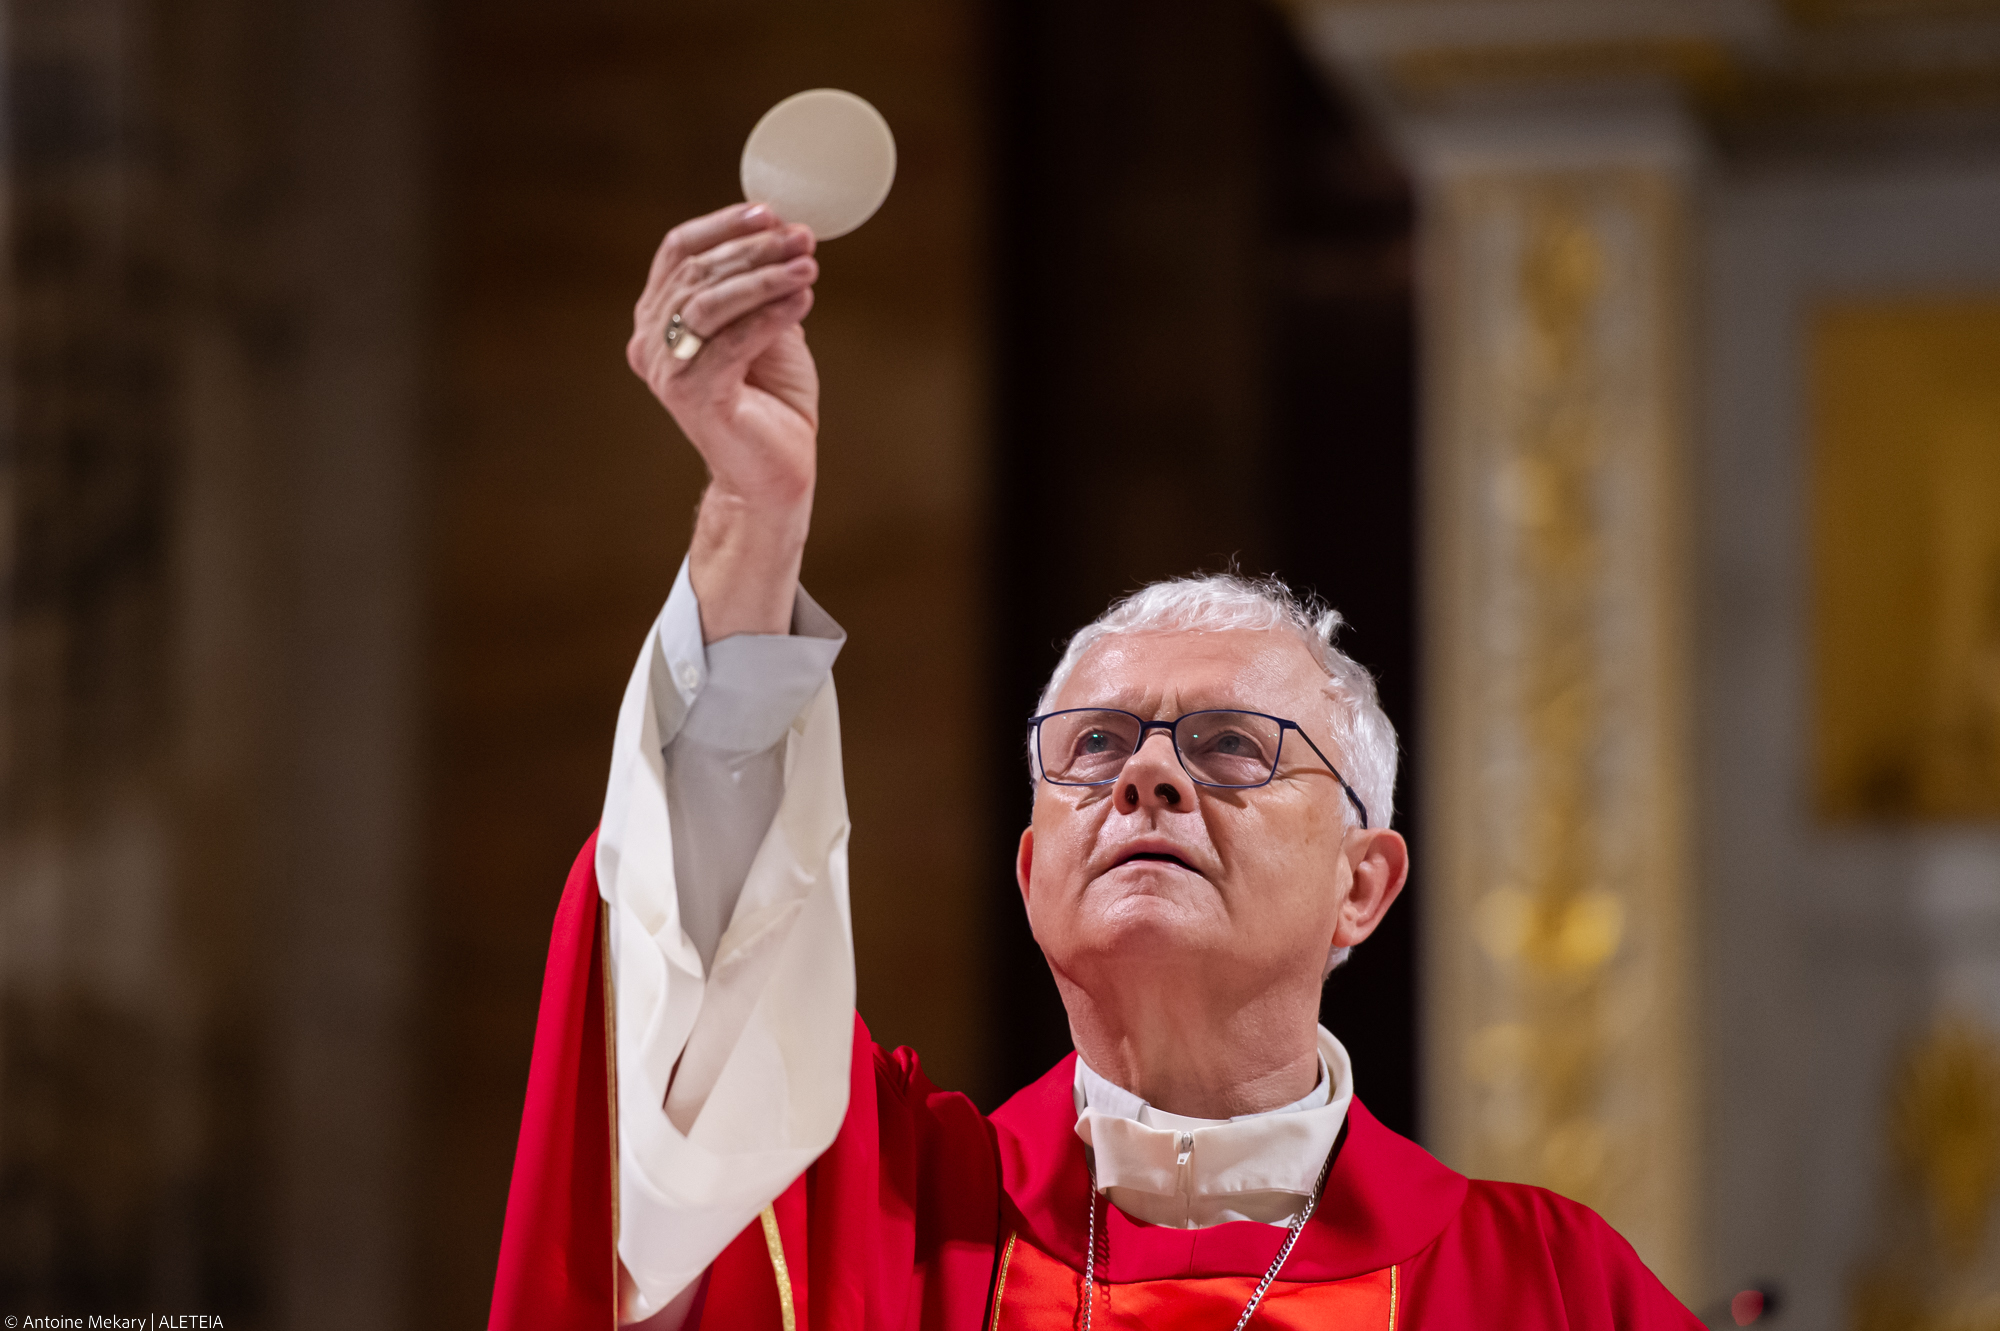 Belgian bishops on an Ad Limina visit to Rome